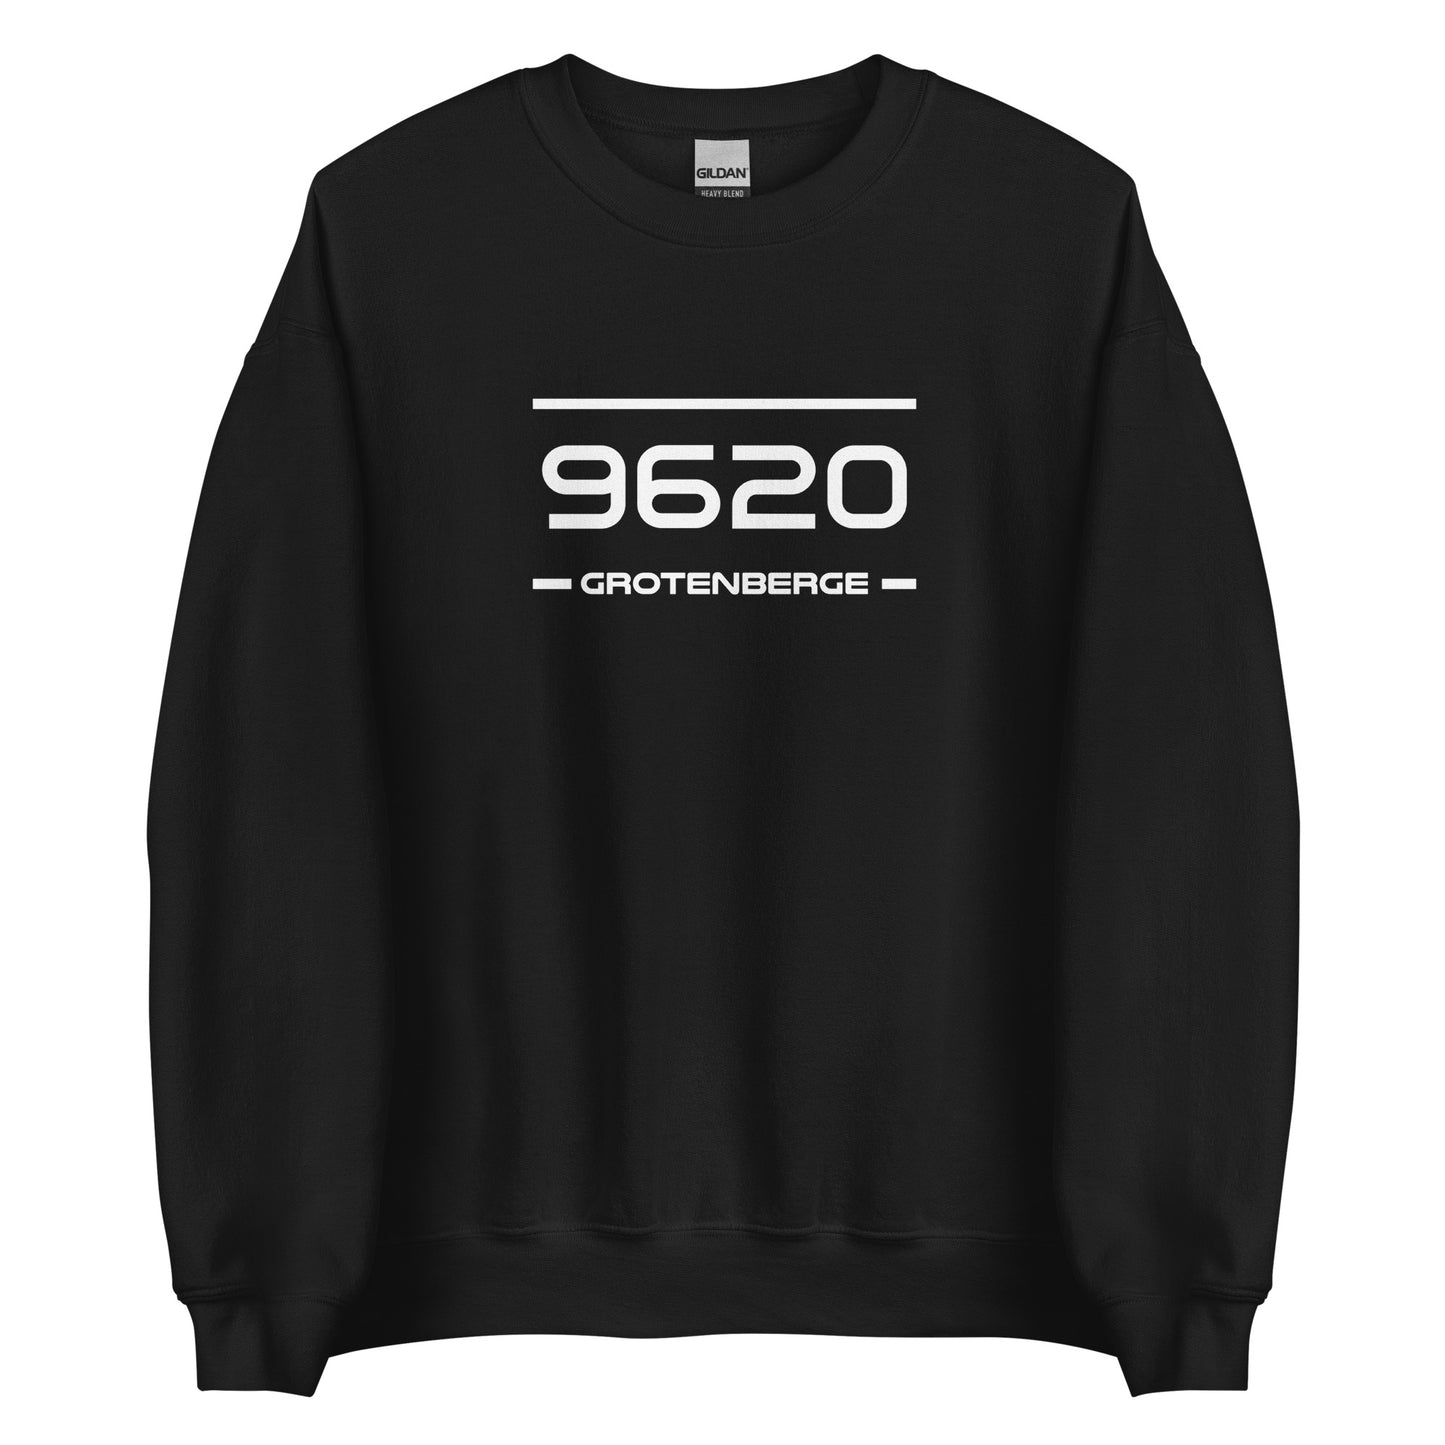 Sweater - 9620 - Grotenberge (M/V)